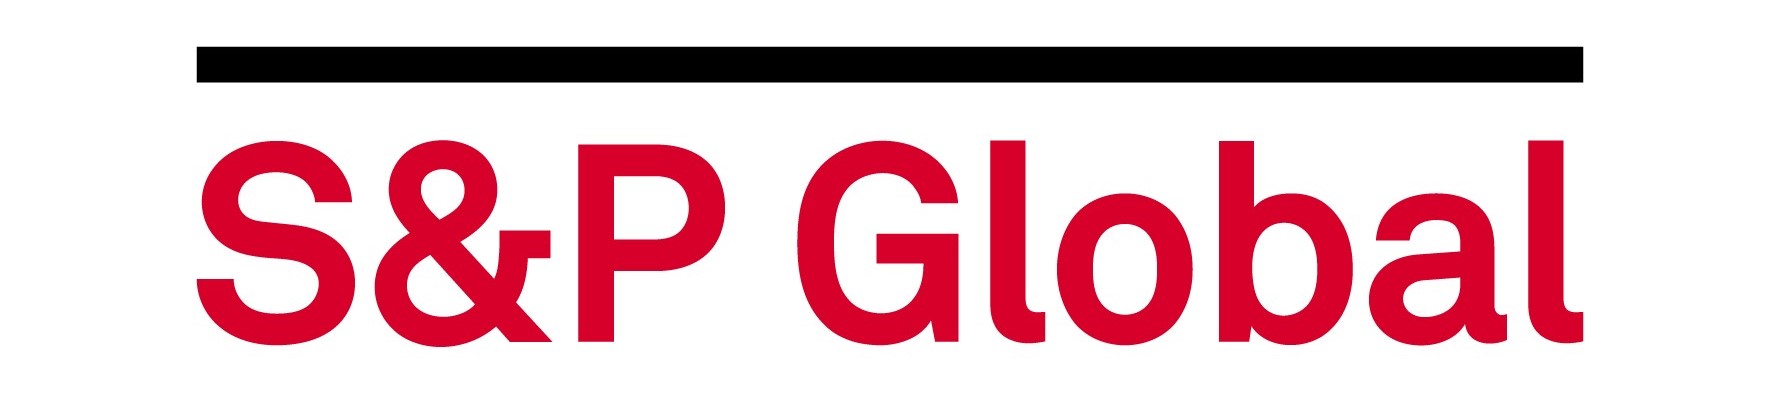 S&P GLOBAL4